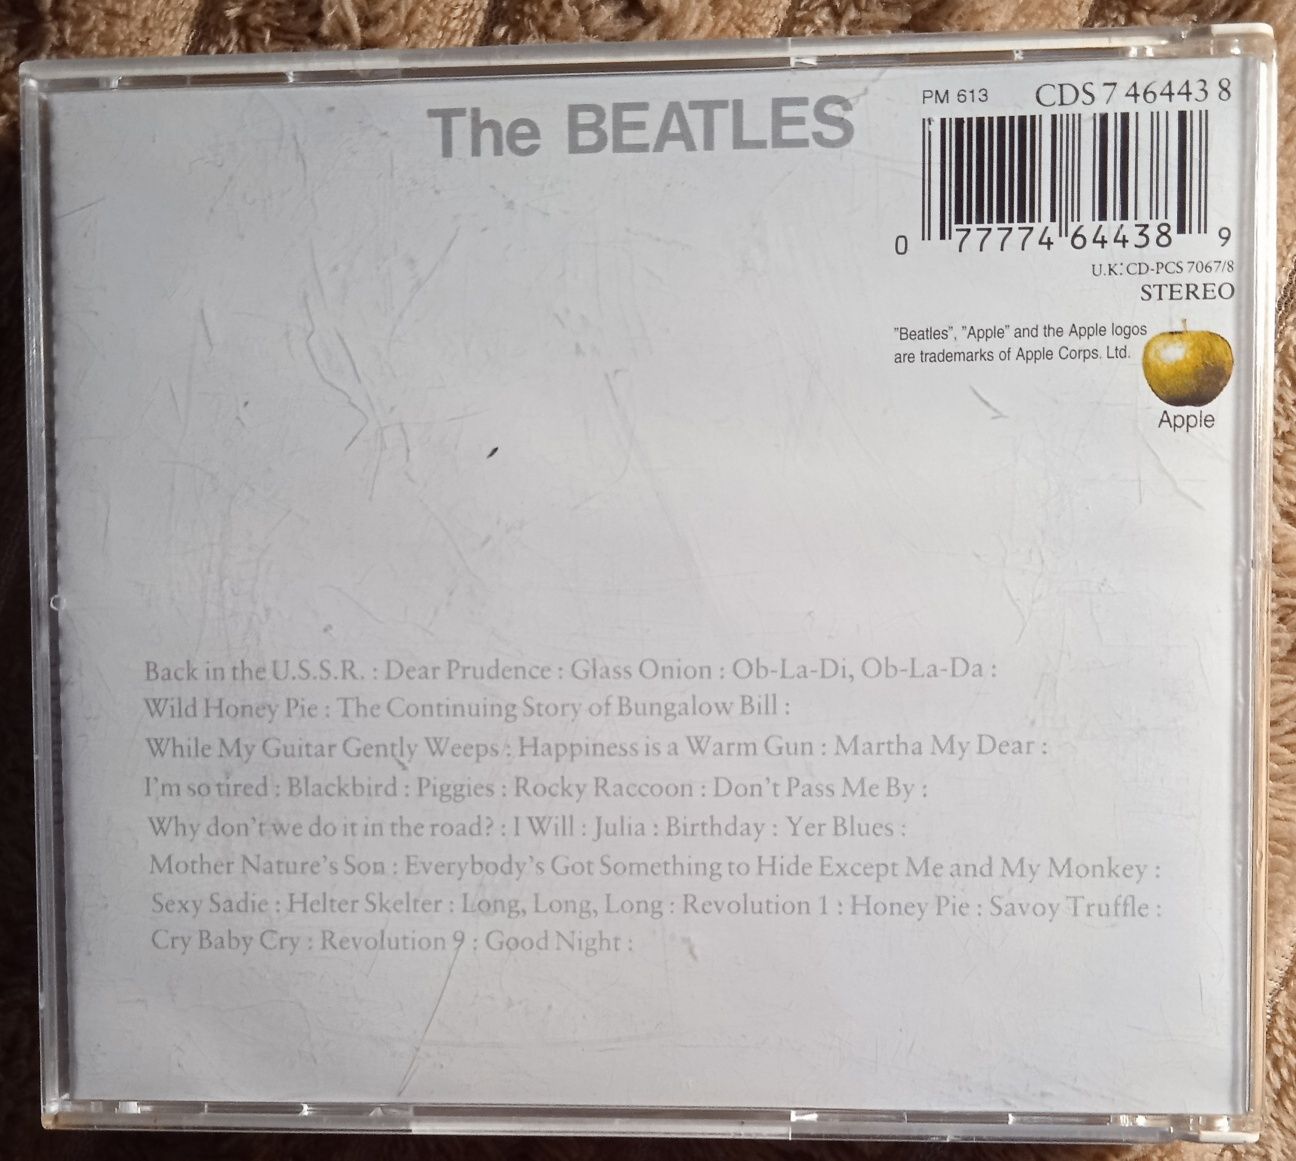 The Beatles -The Beatles (White album) 2CD